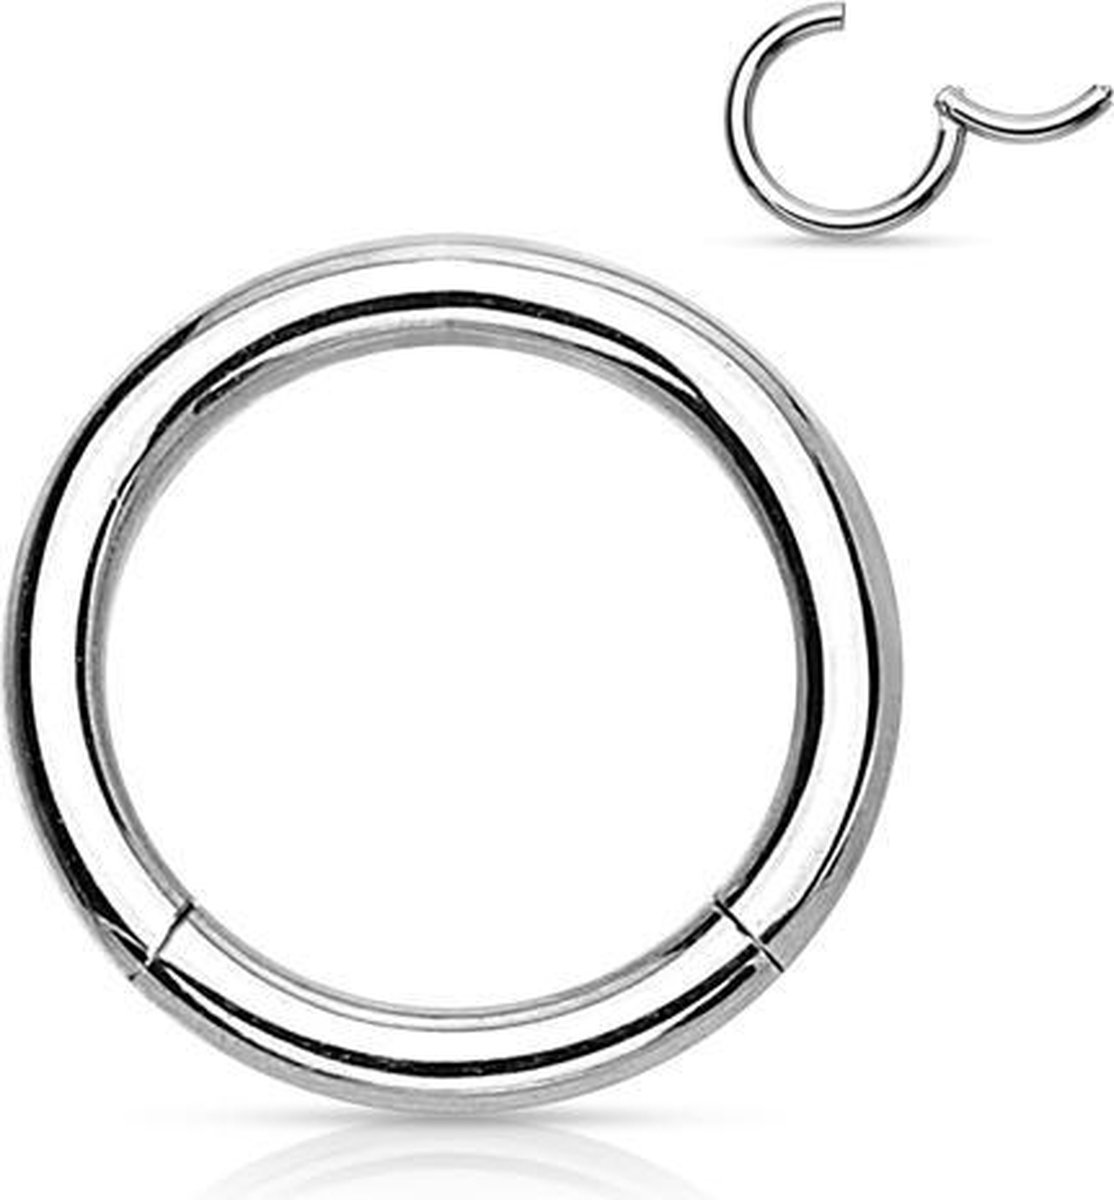 Piercing ring high quality 1.2x10mm - LMPiercings NL